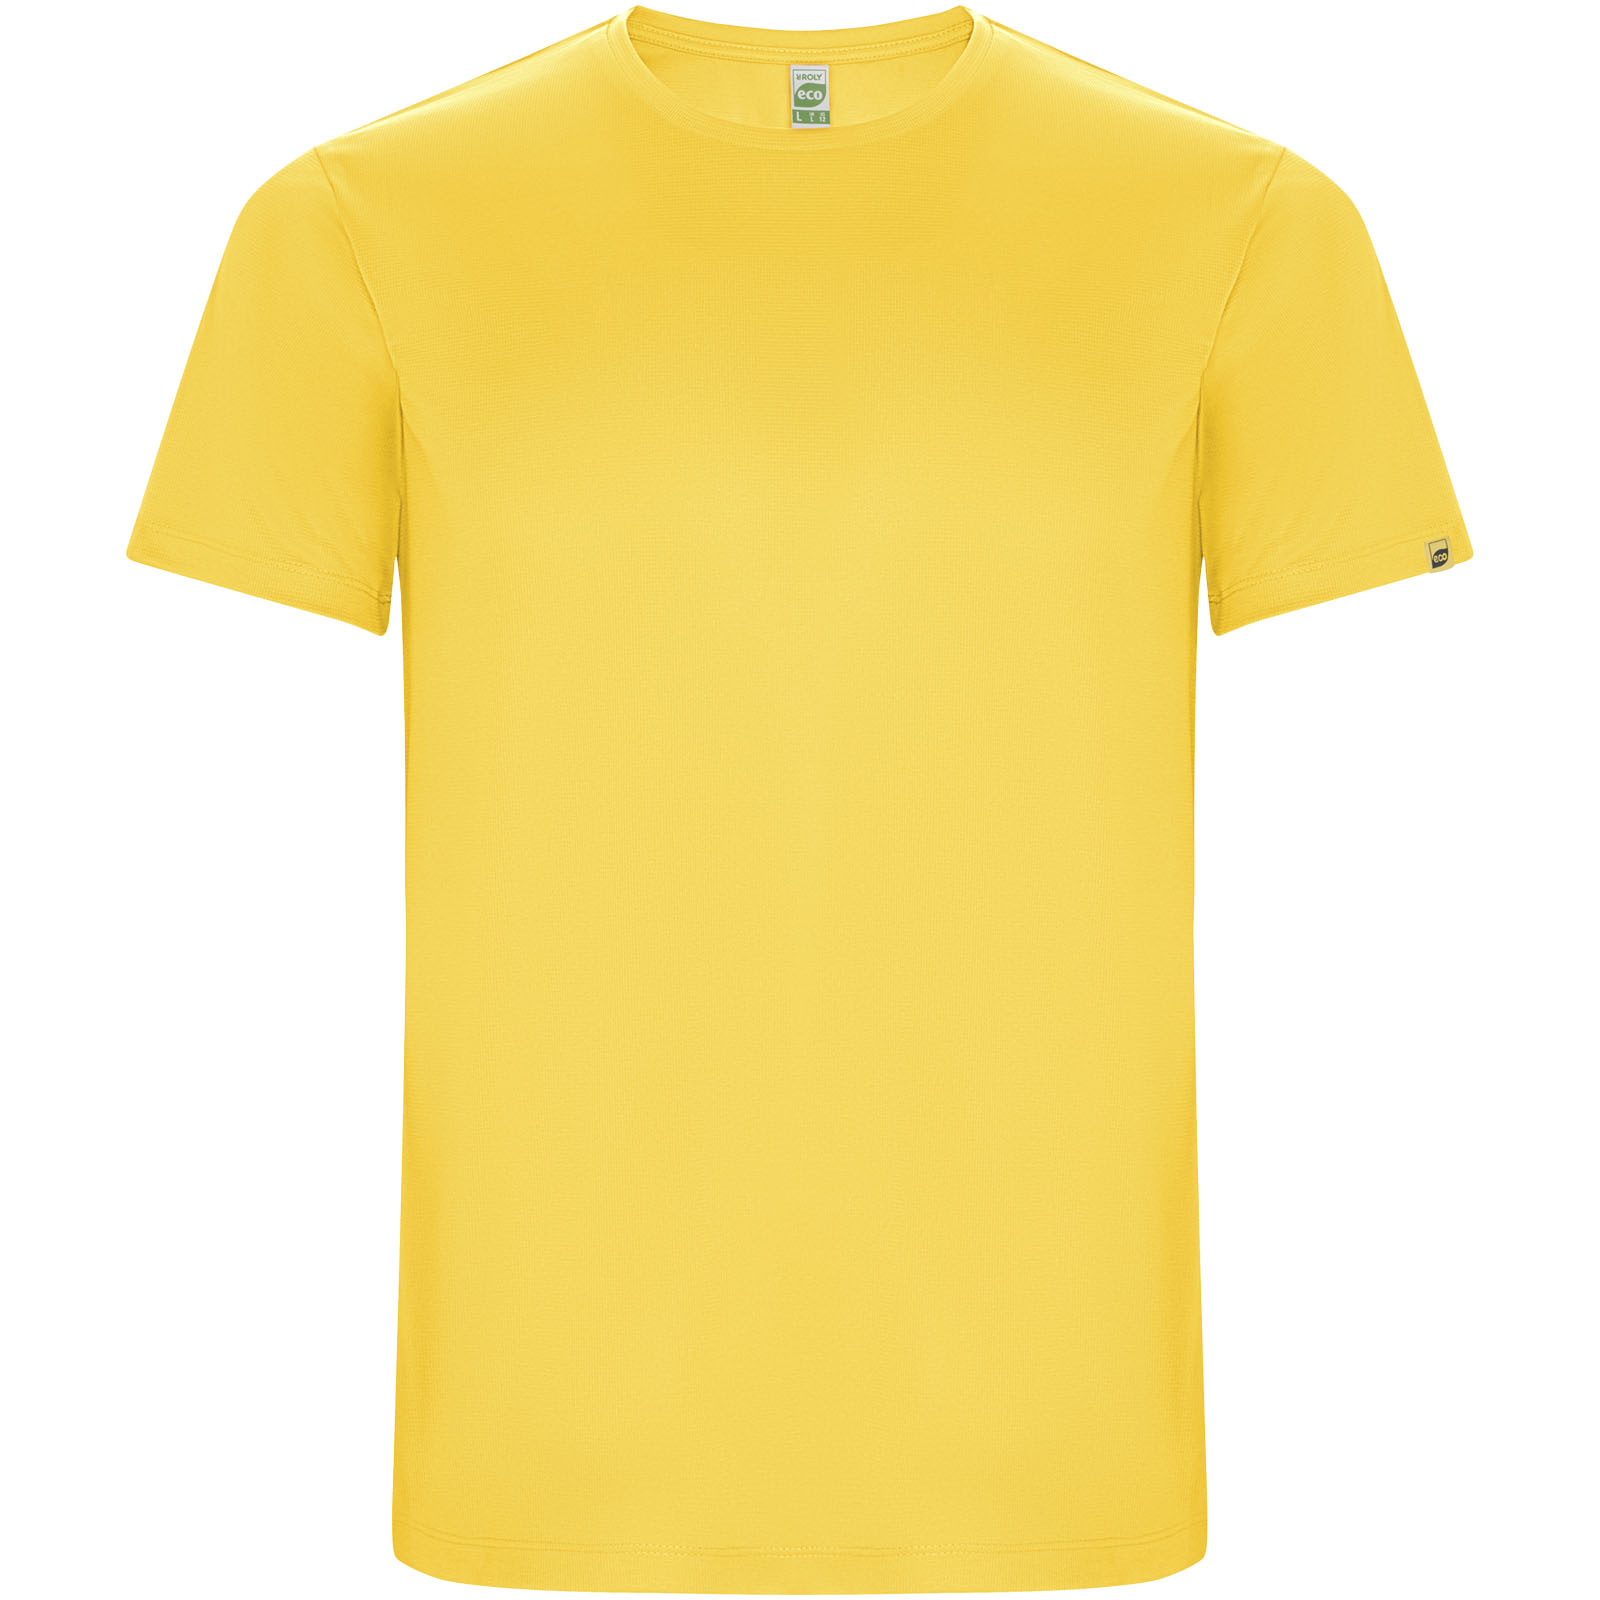 Imola short sleeve sports t-shirt for kids - Chesham